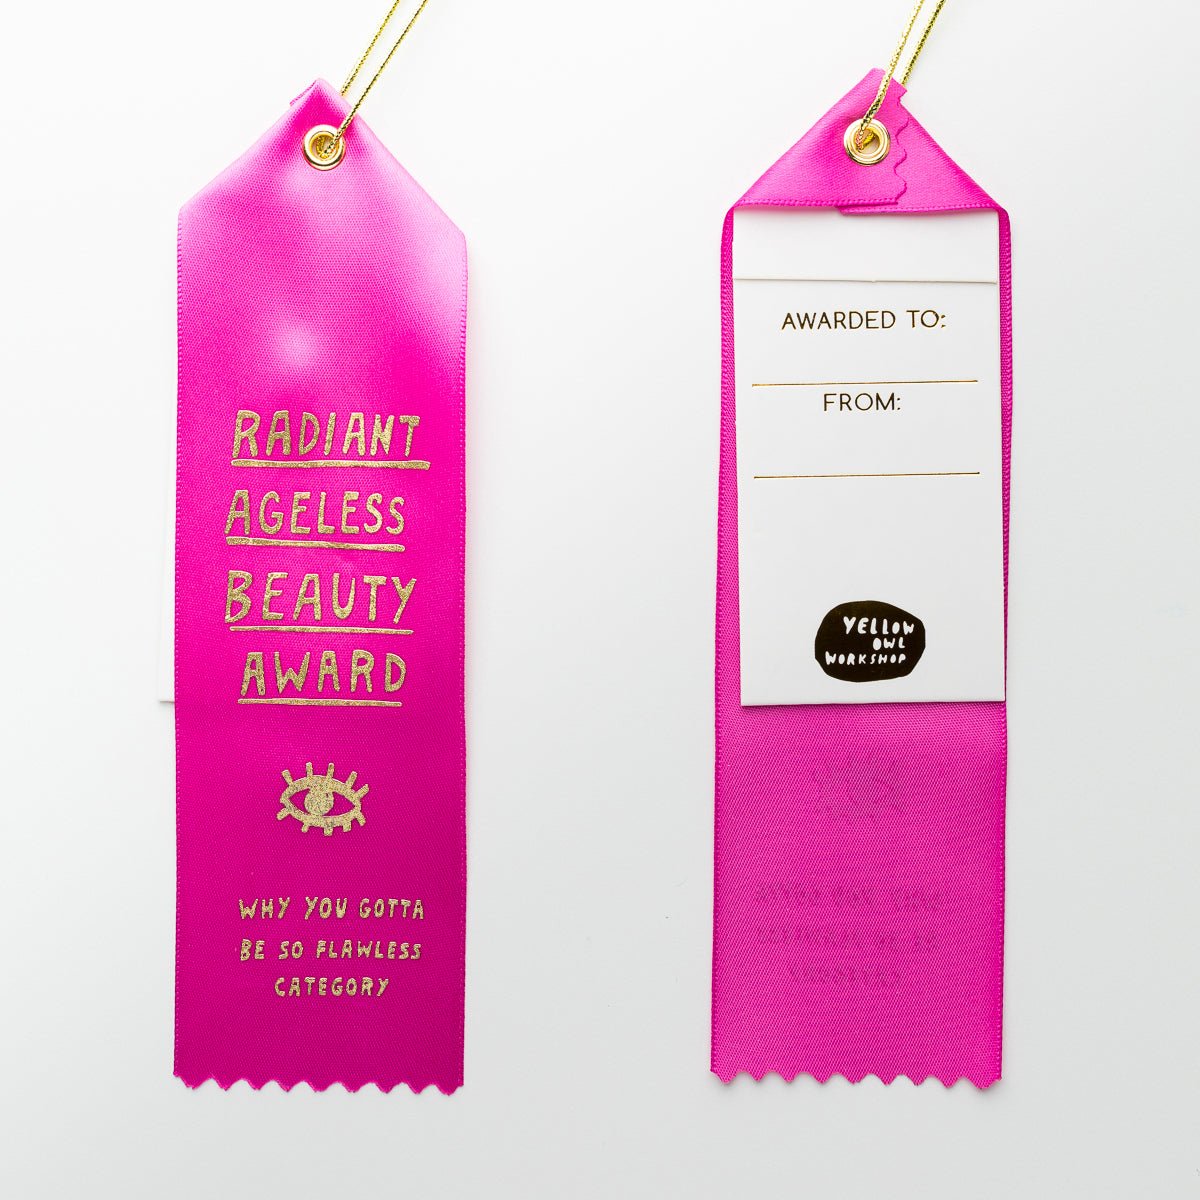 Radiant Ageless Beauty Award - Award Ribbon Card - Yellow Owl Workshop